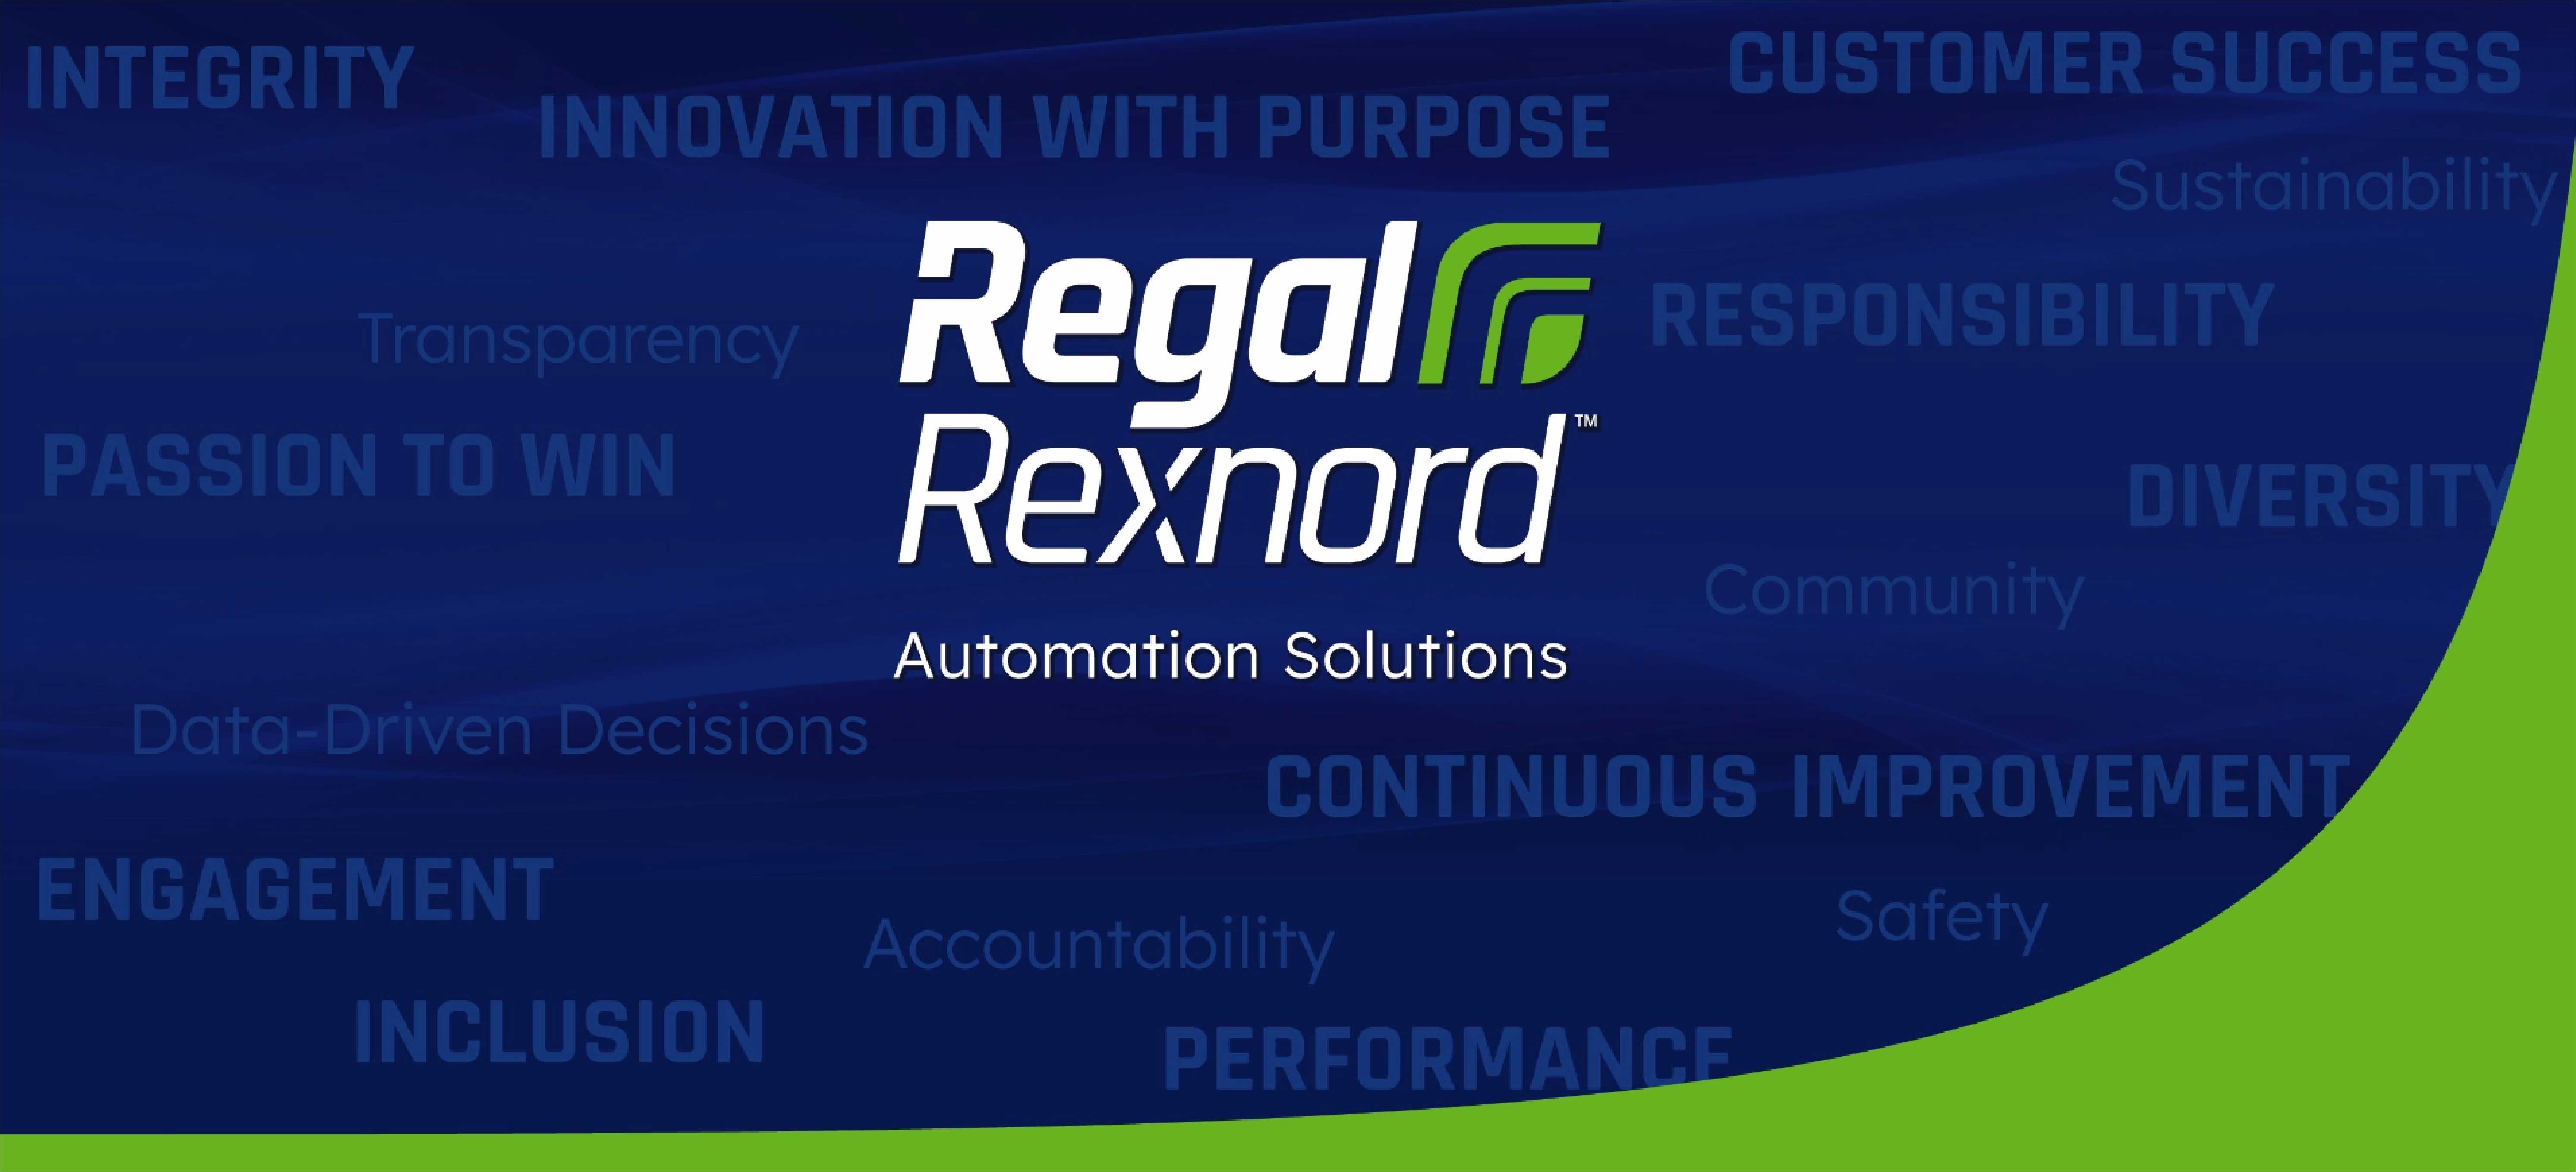 proimages/RegalRexnord/RegalRexnord_automation_solution.jpg